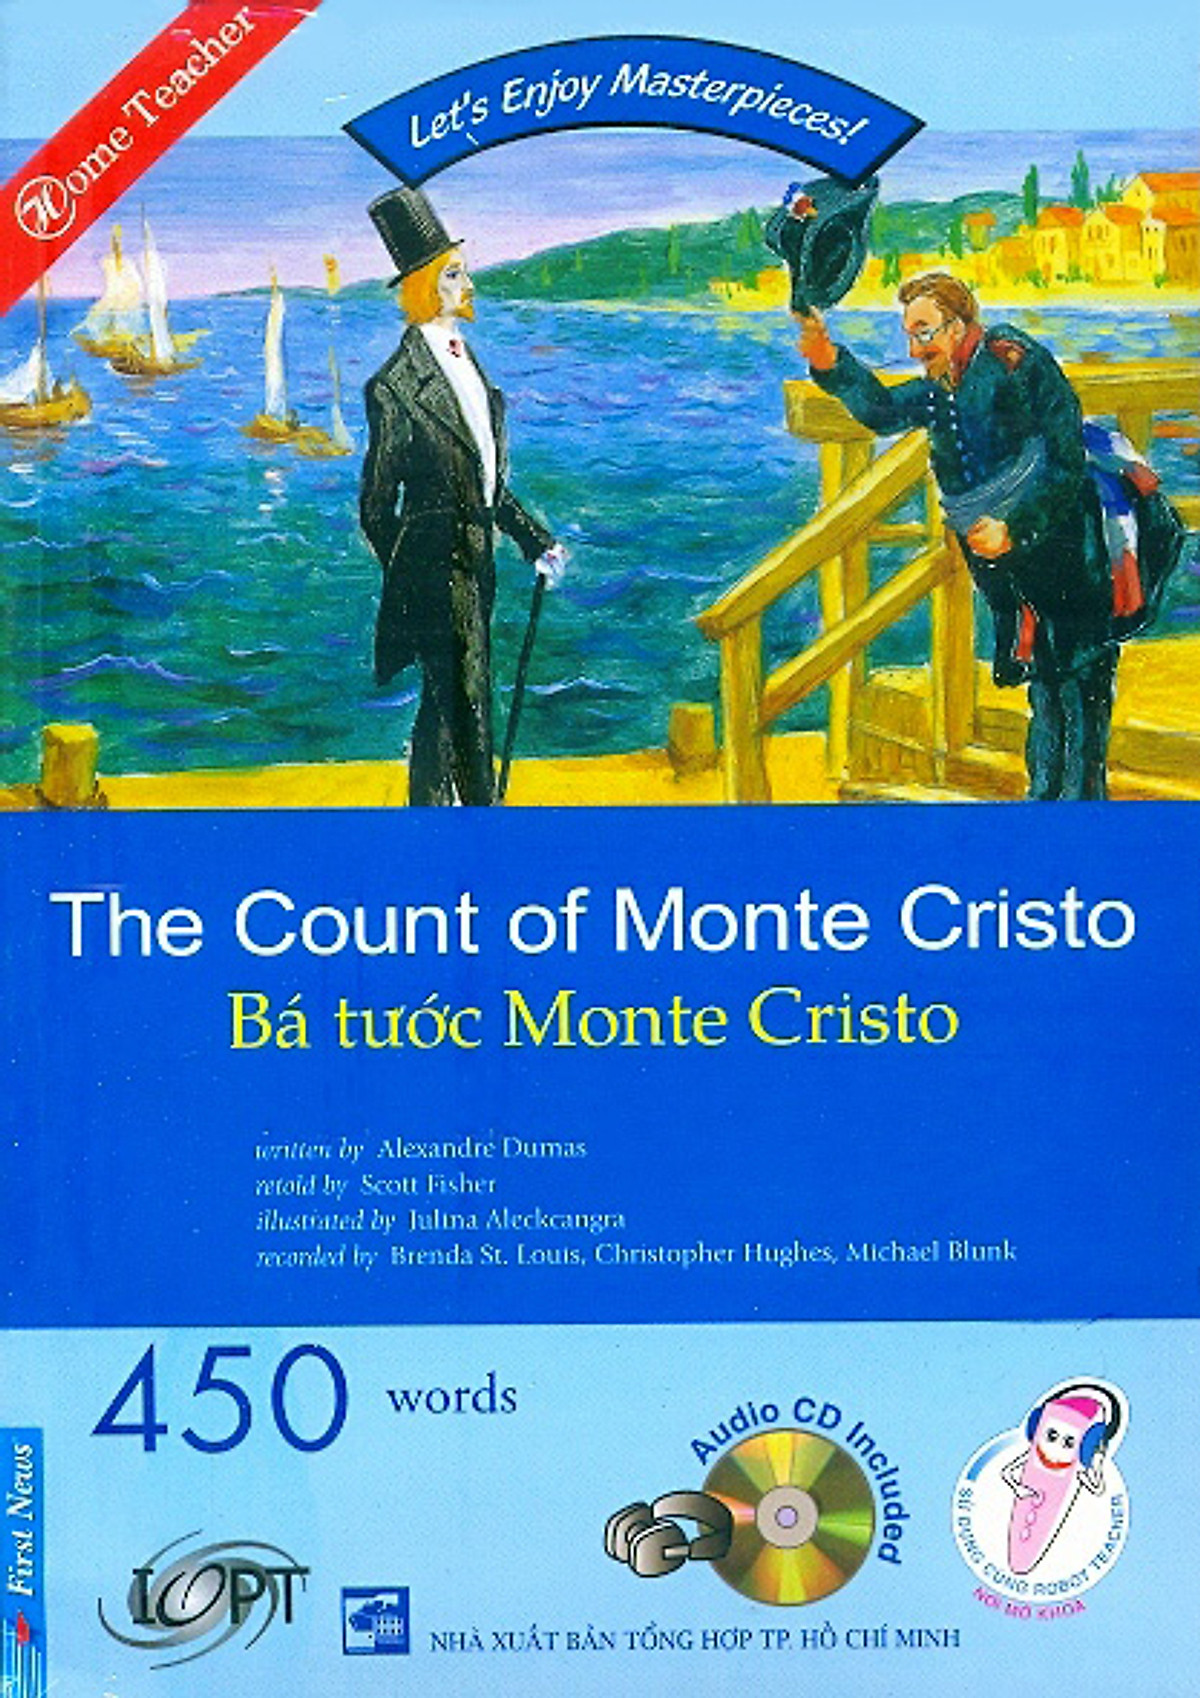 Happy Reader - Bá Tước Monte Cristo - Kèm 1 CD 